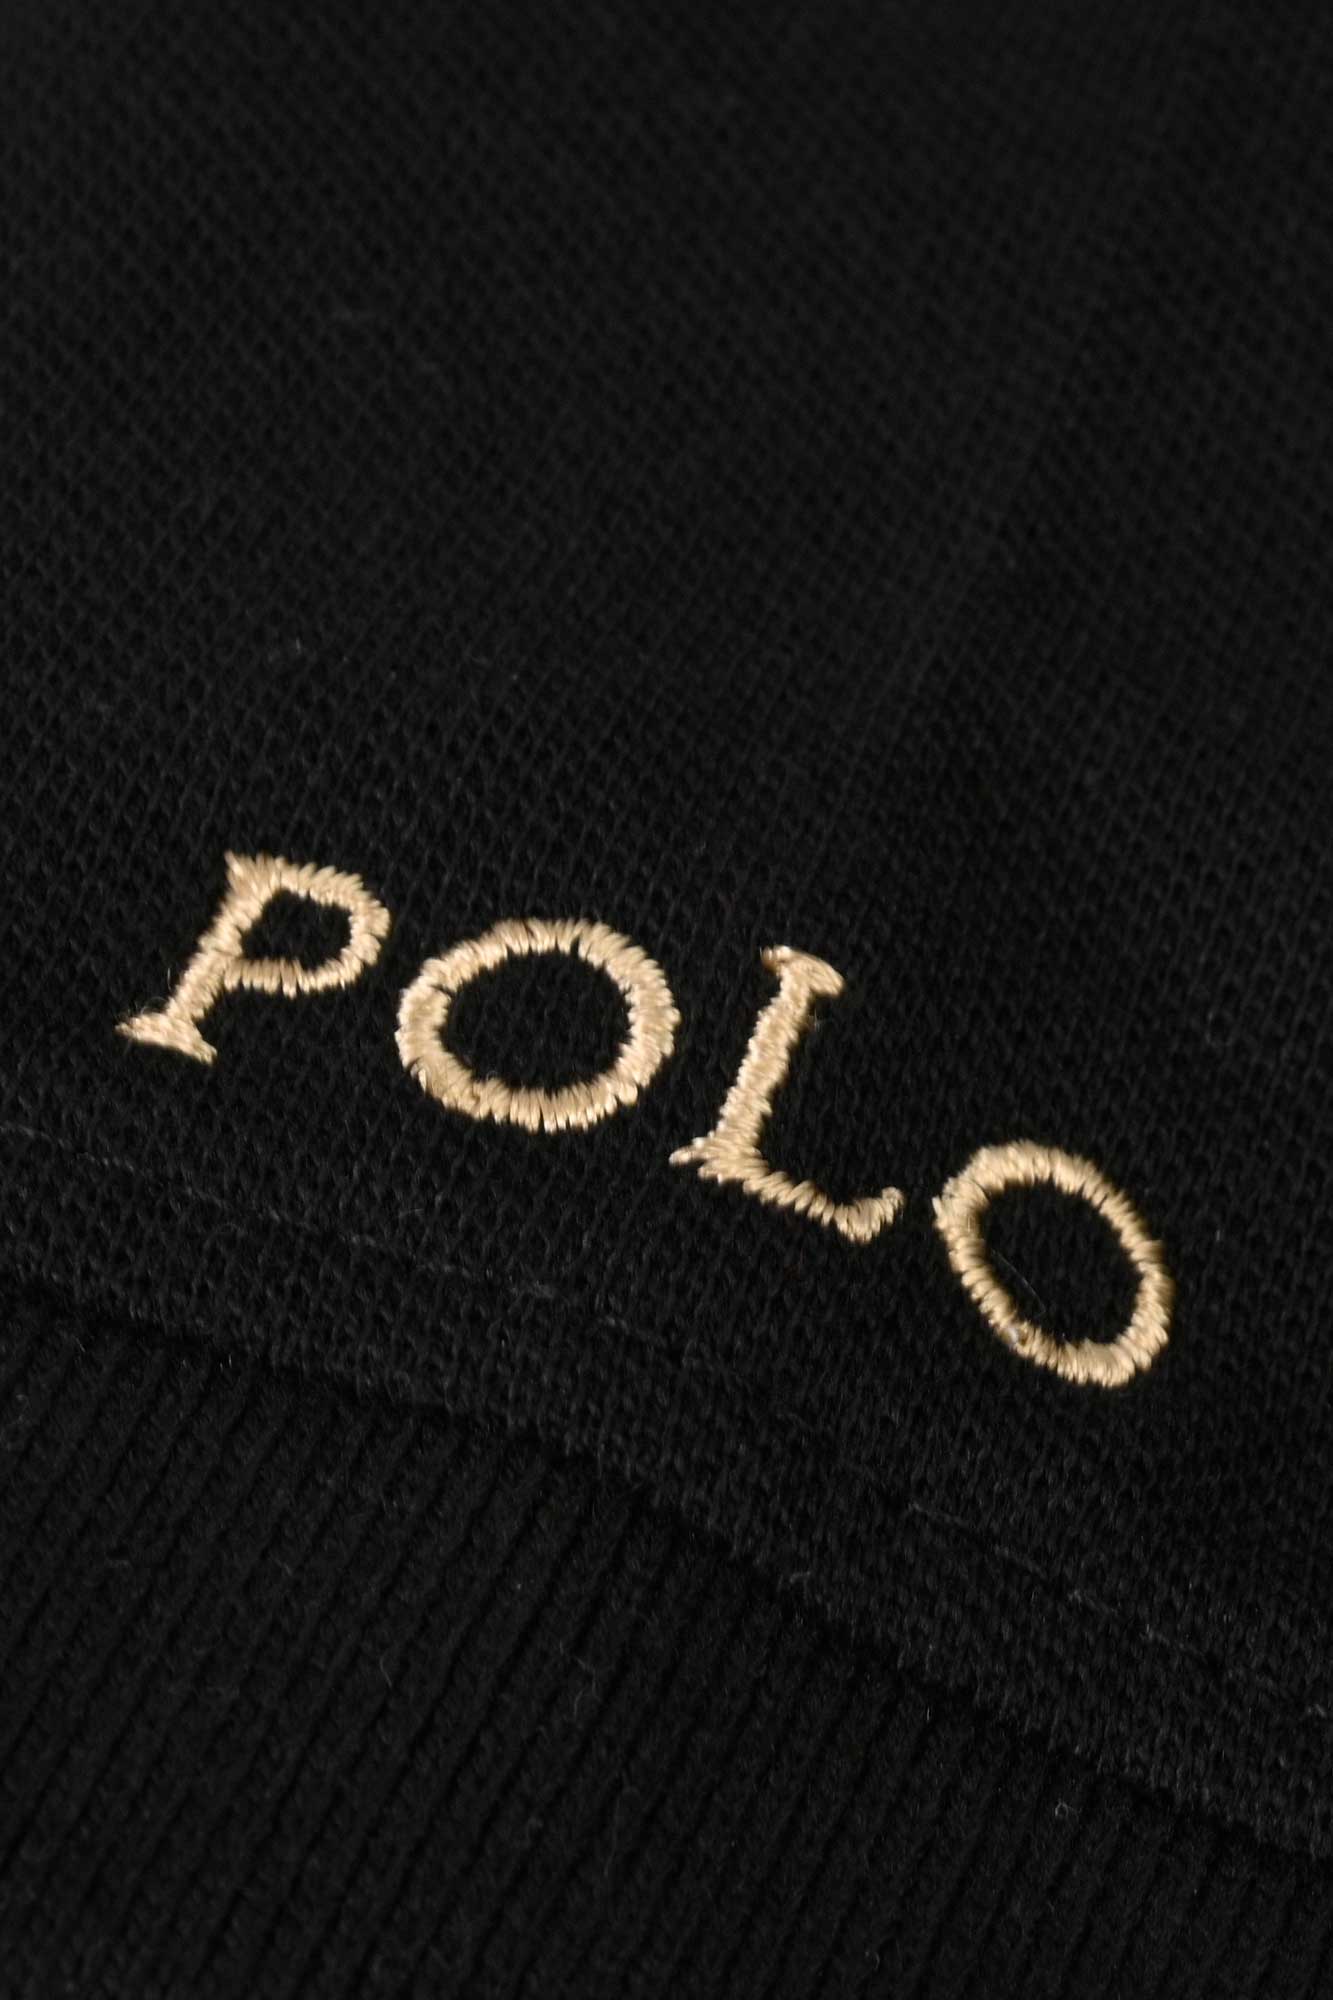 Polo Republica Men's Polo & Lion Embroidered Short Sleeve Polo Shirt Men's Polo Shirt Polo Republica 